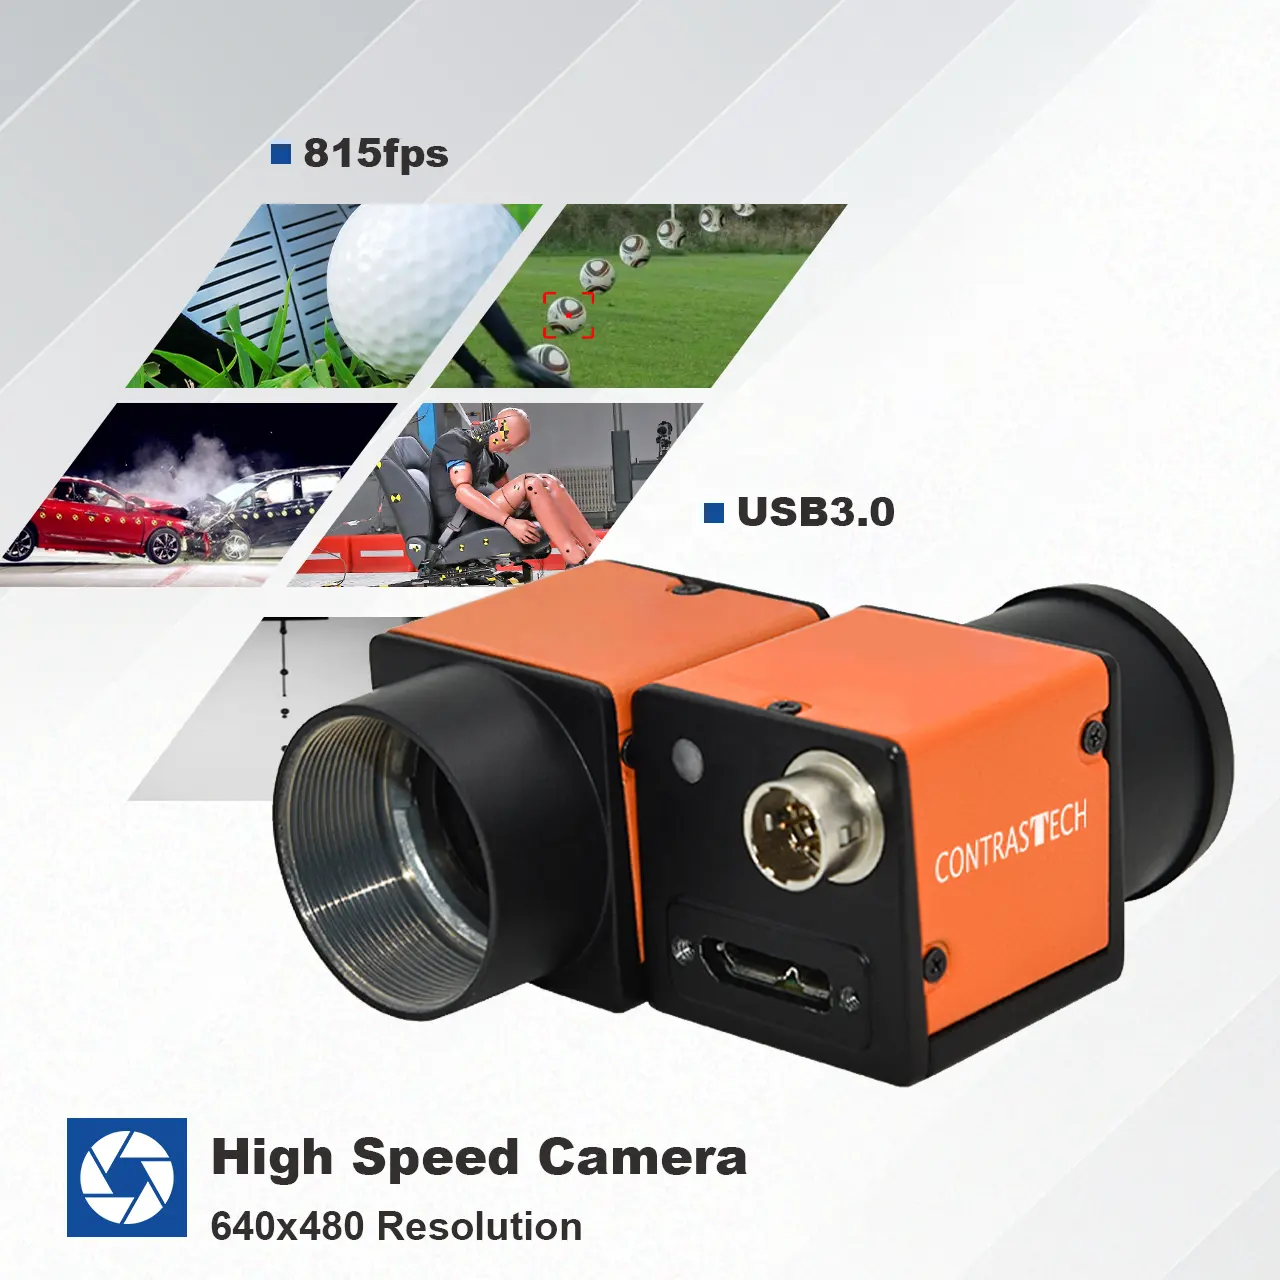 Top sale 0.3MP 1000fps High Speed 815 fps USB3.0 C Mount CMOS Golf Camera Module For 3D Scanning Contrastech